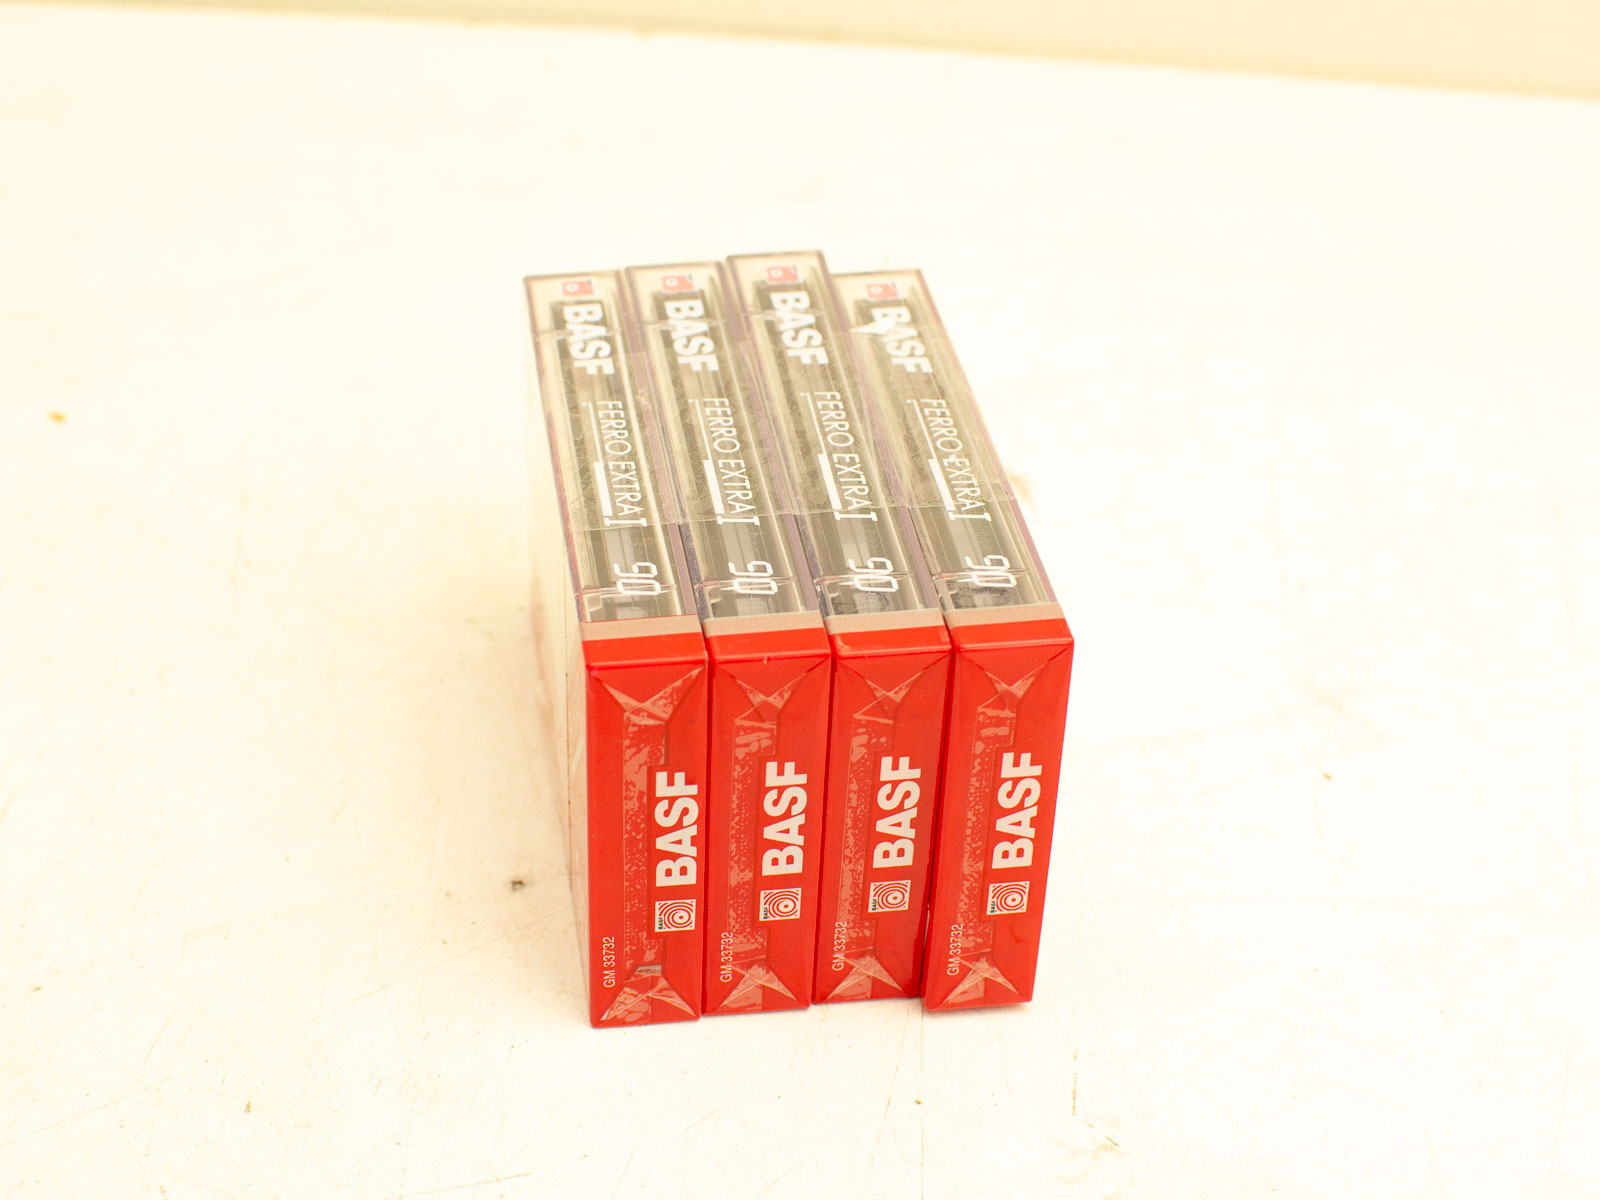 4  Basf cassettebandjes  31242